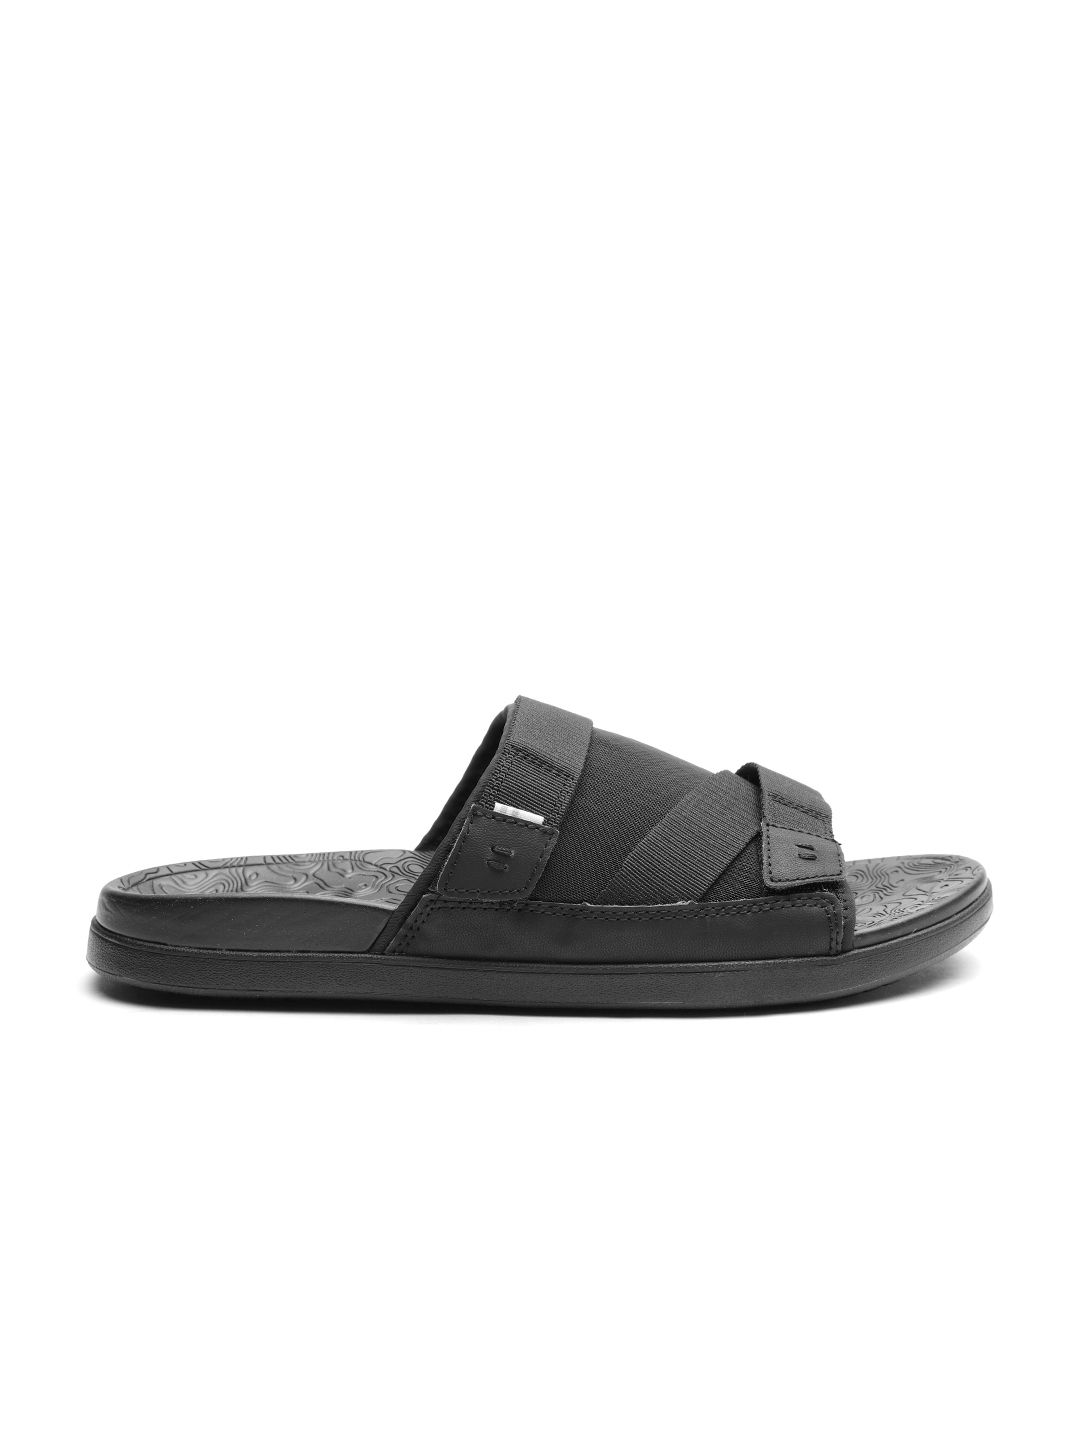 Buy TOMS Men Black Comfort Sandals - Sandals for Men 9556651 | Myntra